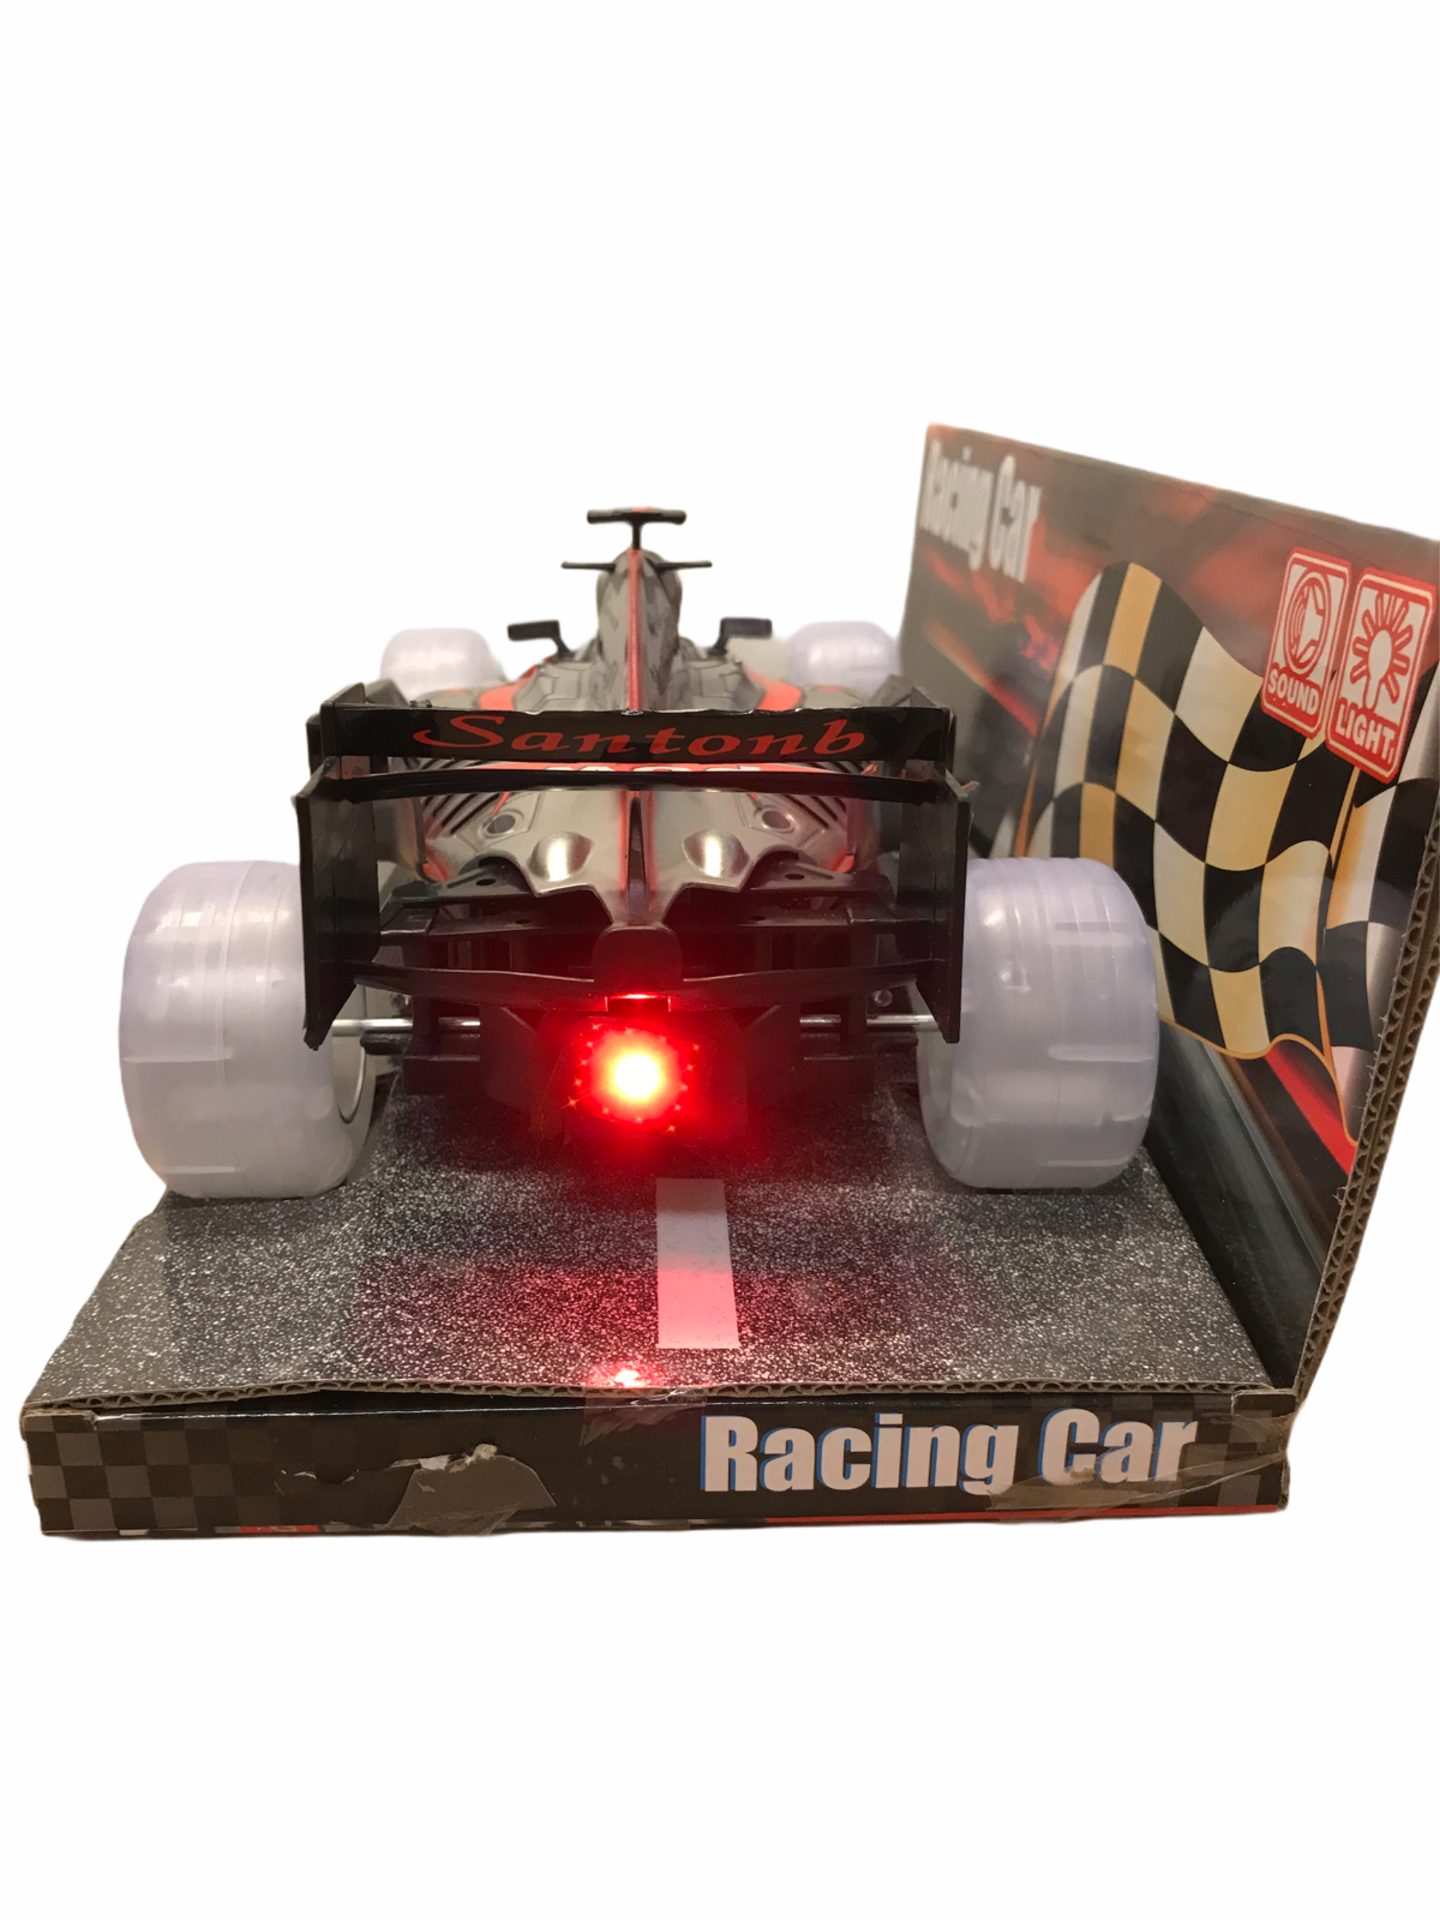 12 X Ultrasonic F1 Racing Car Makes Sound And Lights Up Racing - Image 4 of 5